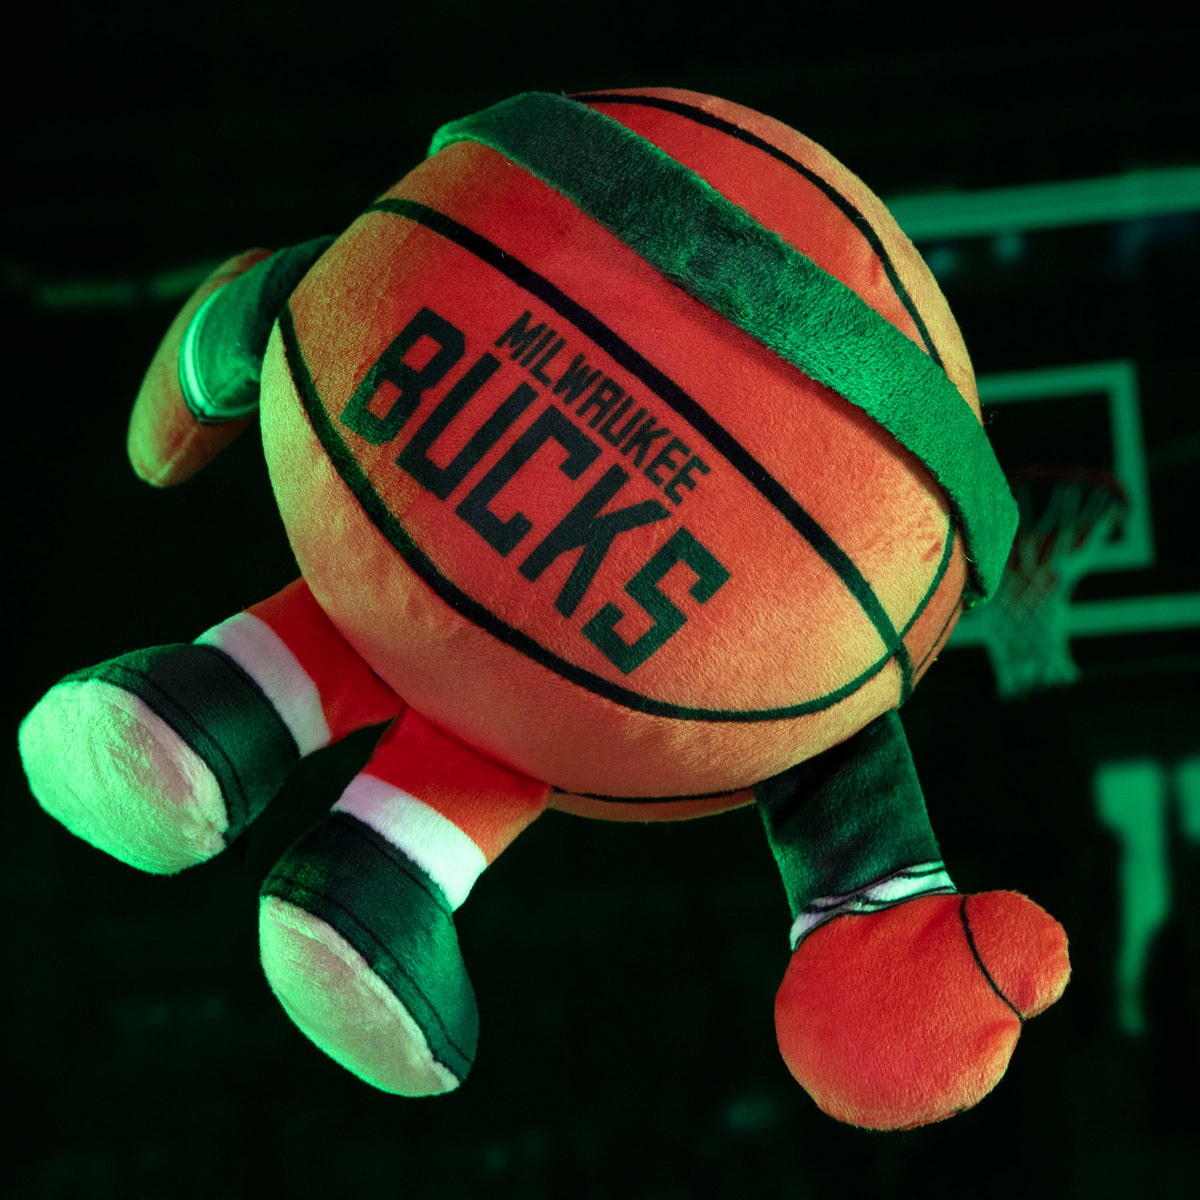 Milwaukee Bucks 8&quot; Kuricha Basketball Plush